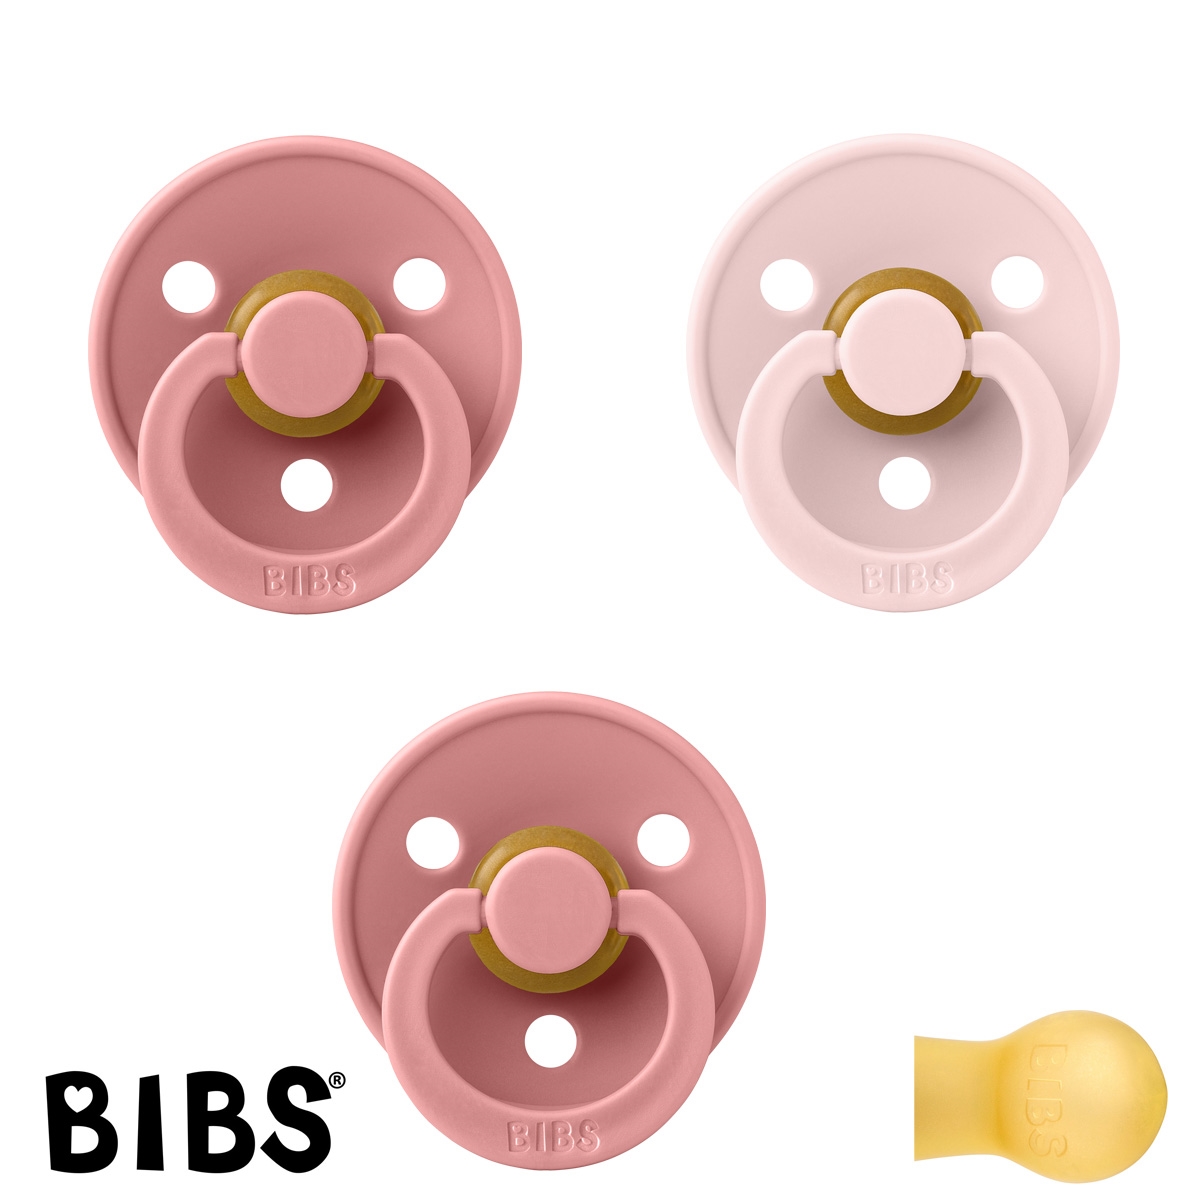 BIBS Colour Sutter med navn str1, 2 Dusty Pink, 1 Blossom, Runde latex, Pakke med 3 sutter